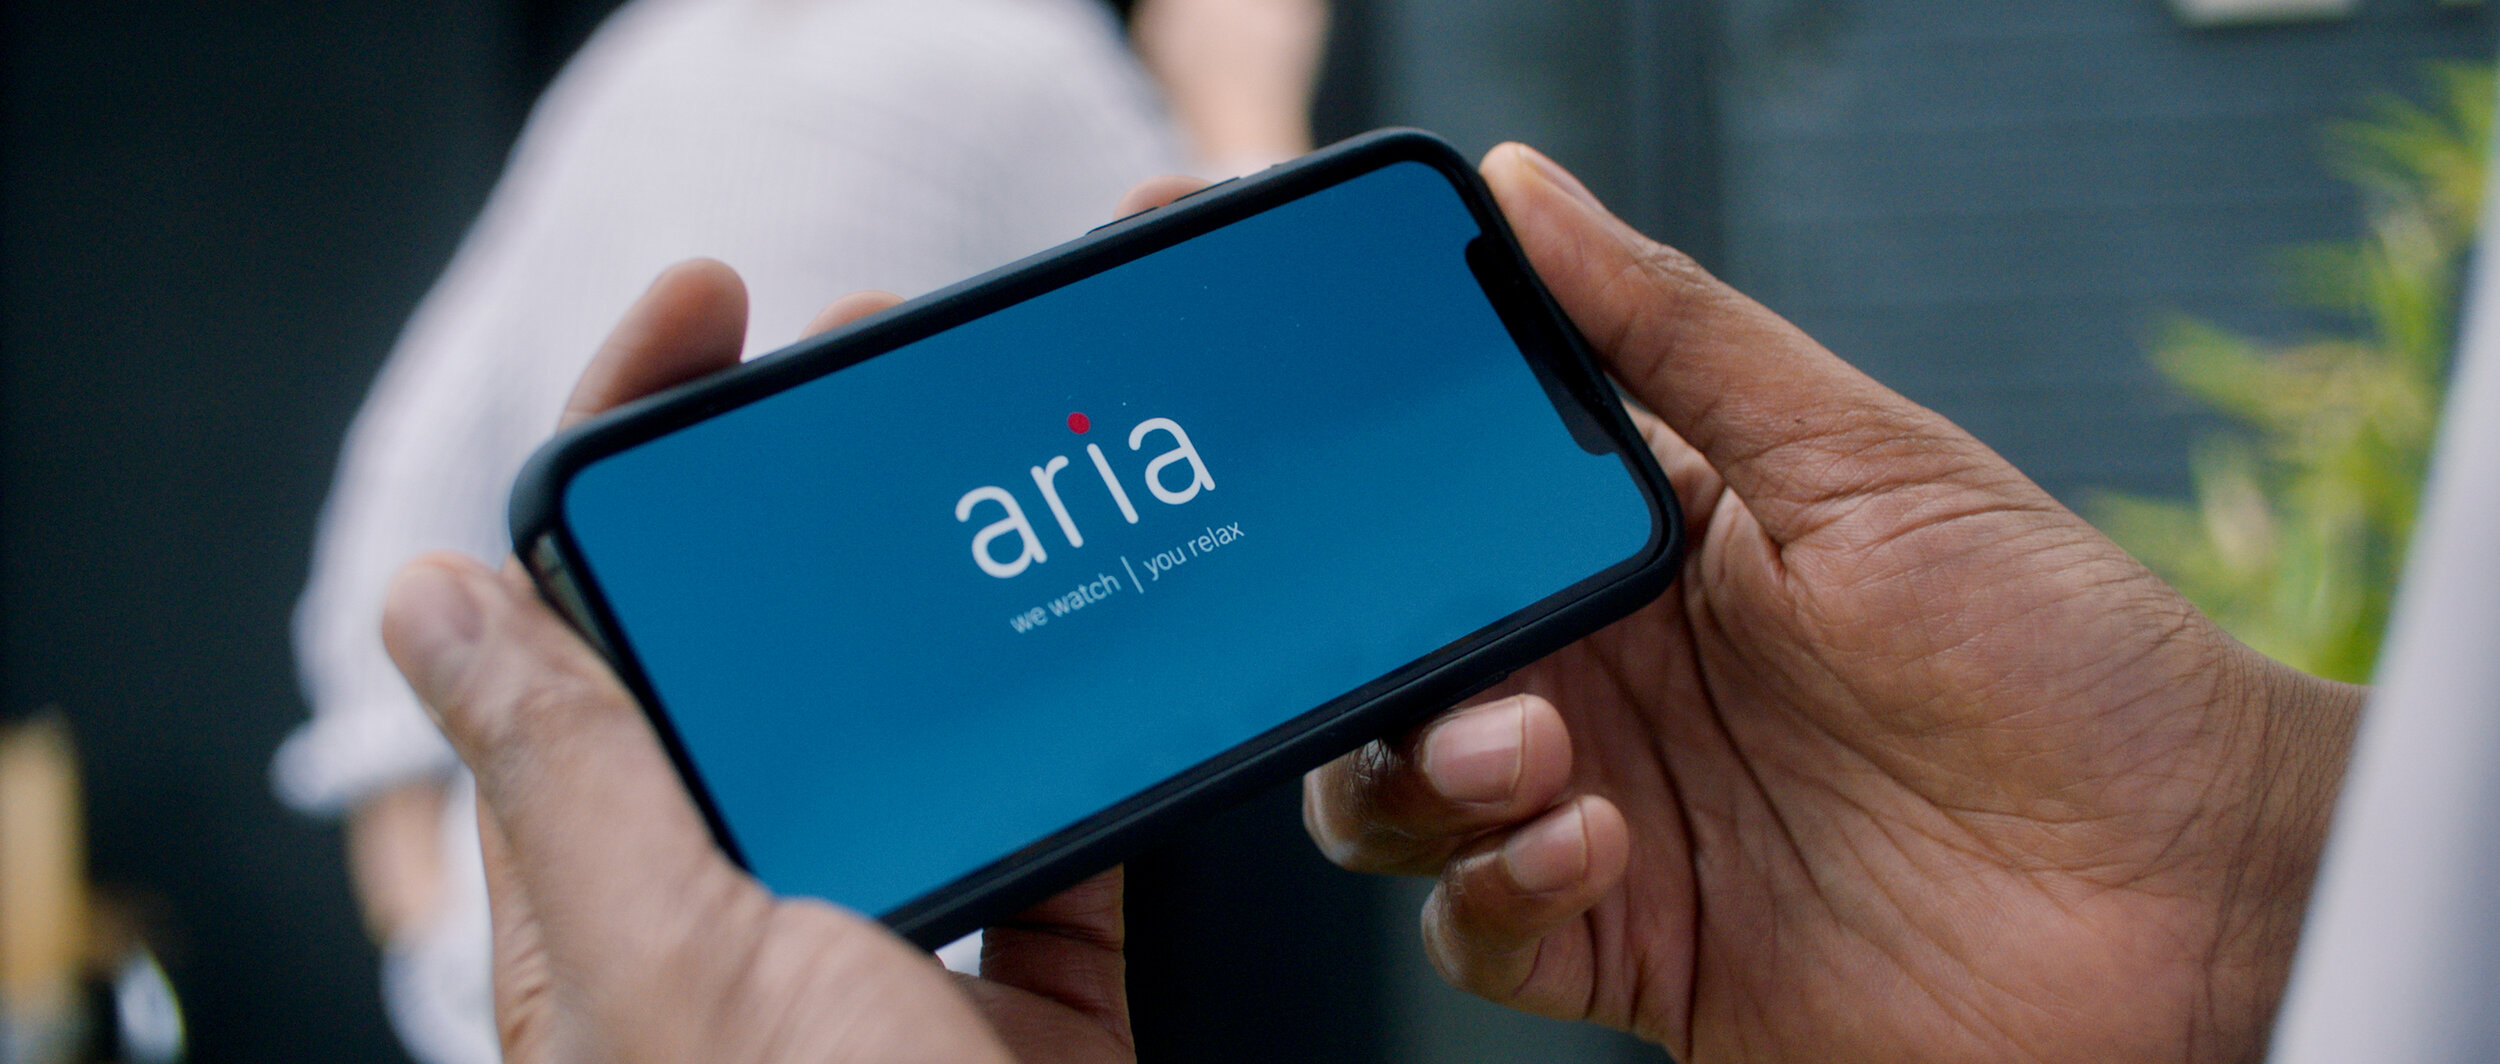 03 Aria logo on phone.jpeg